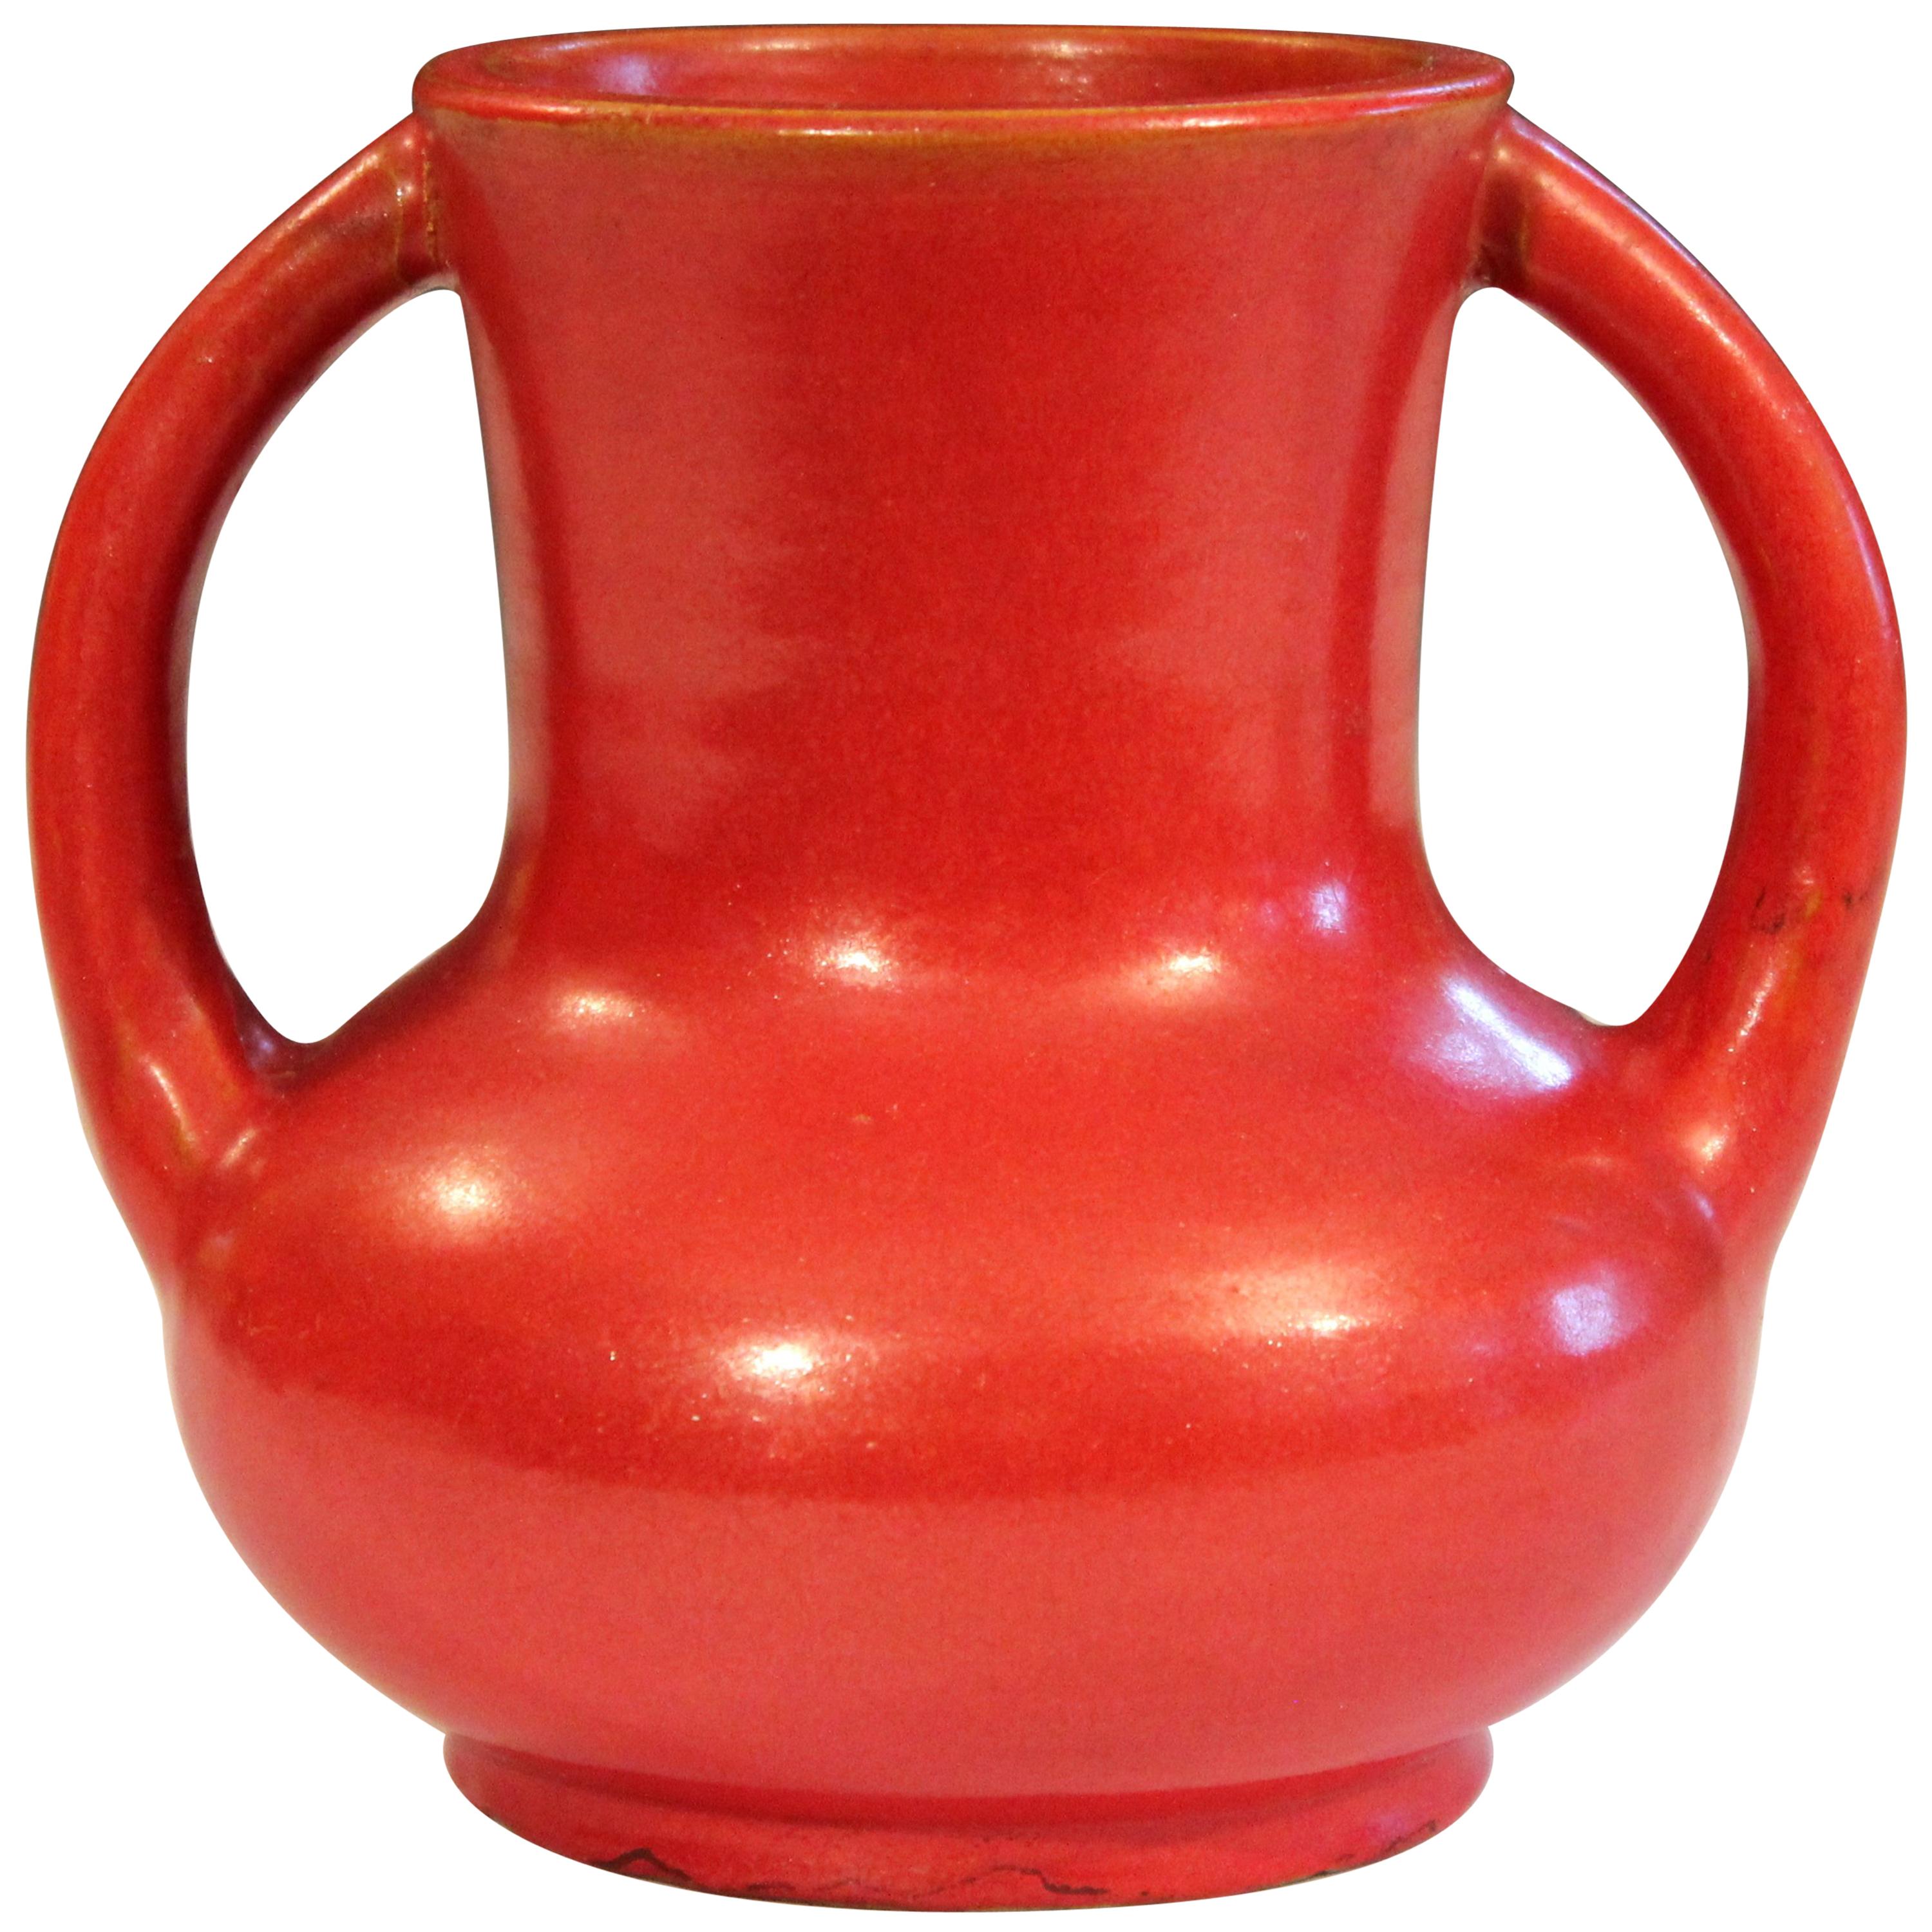 Awaji Pottery Japanese Art Deco Vase Crystalline Chrome Orange Red Glaze